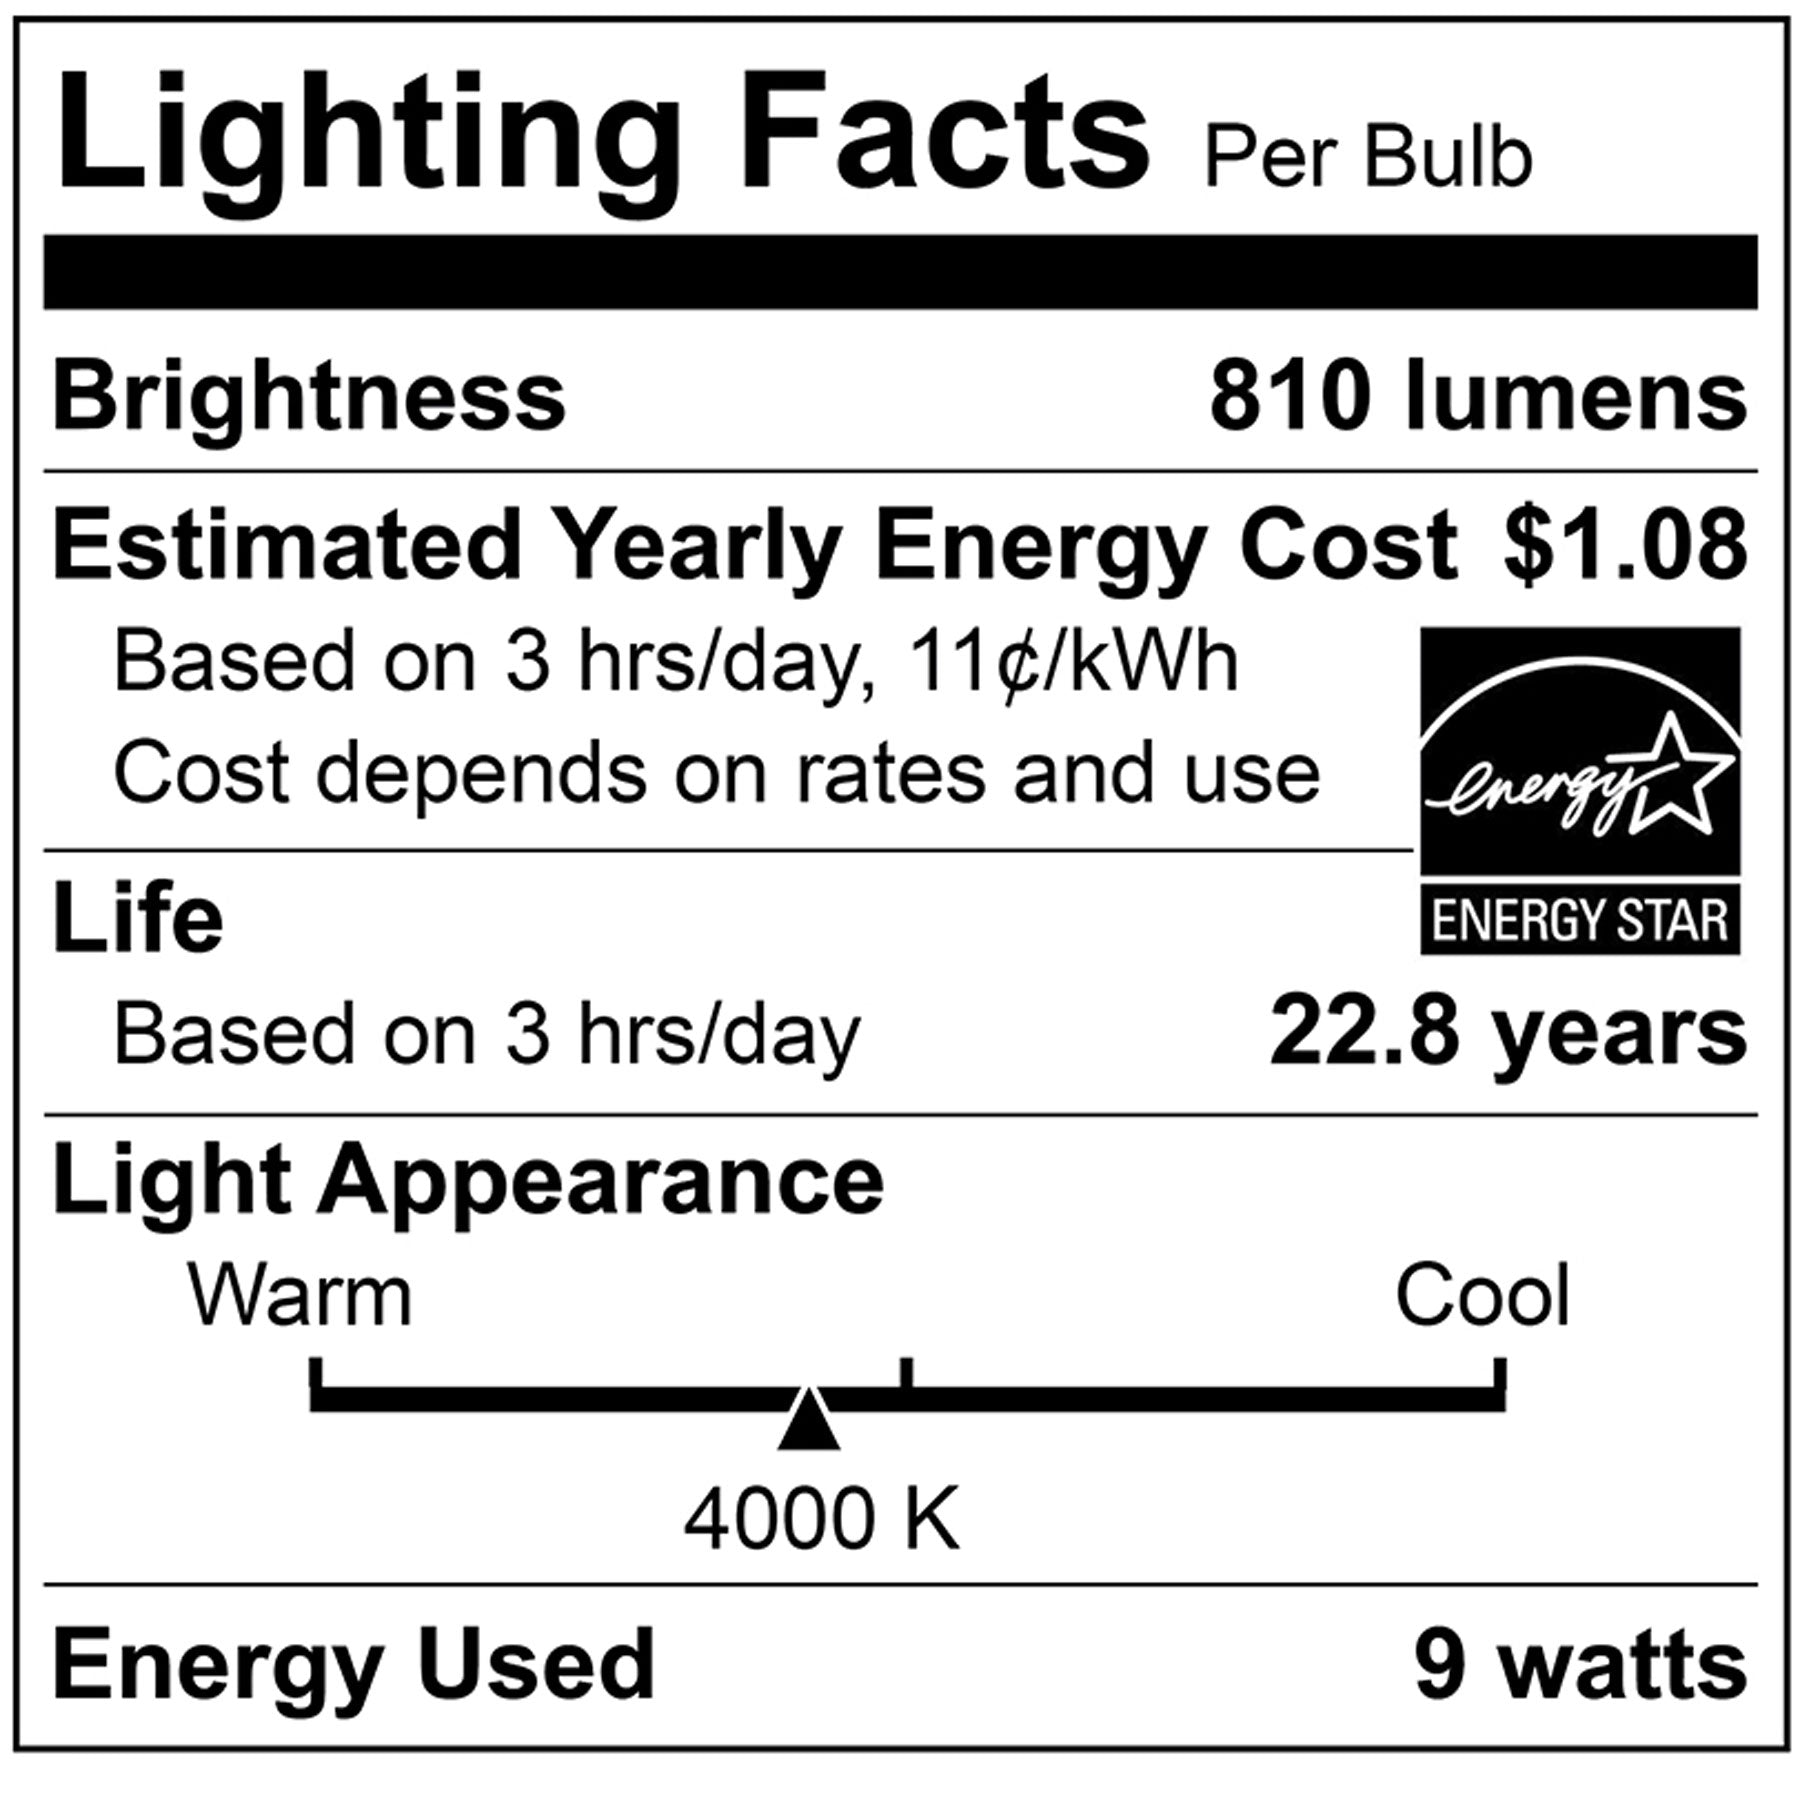 50-Watt Equivalent BR30 E26 LED Indoor Flood Light Bulb, Energy Star / CEC / JA8